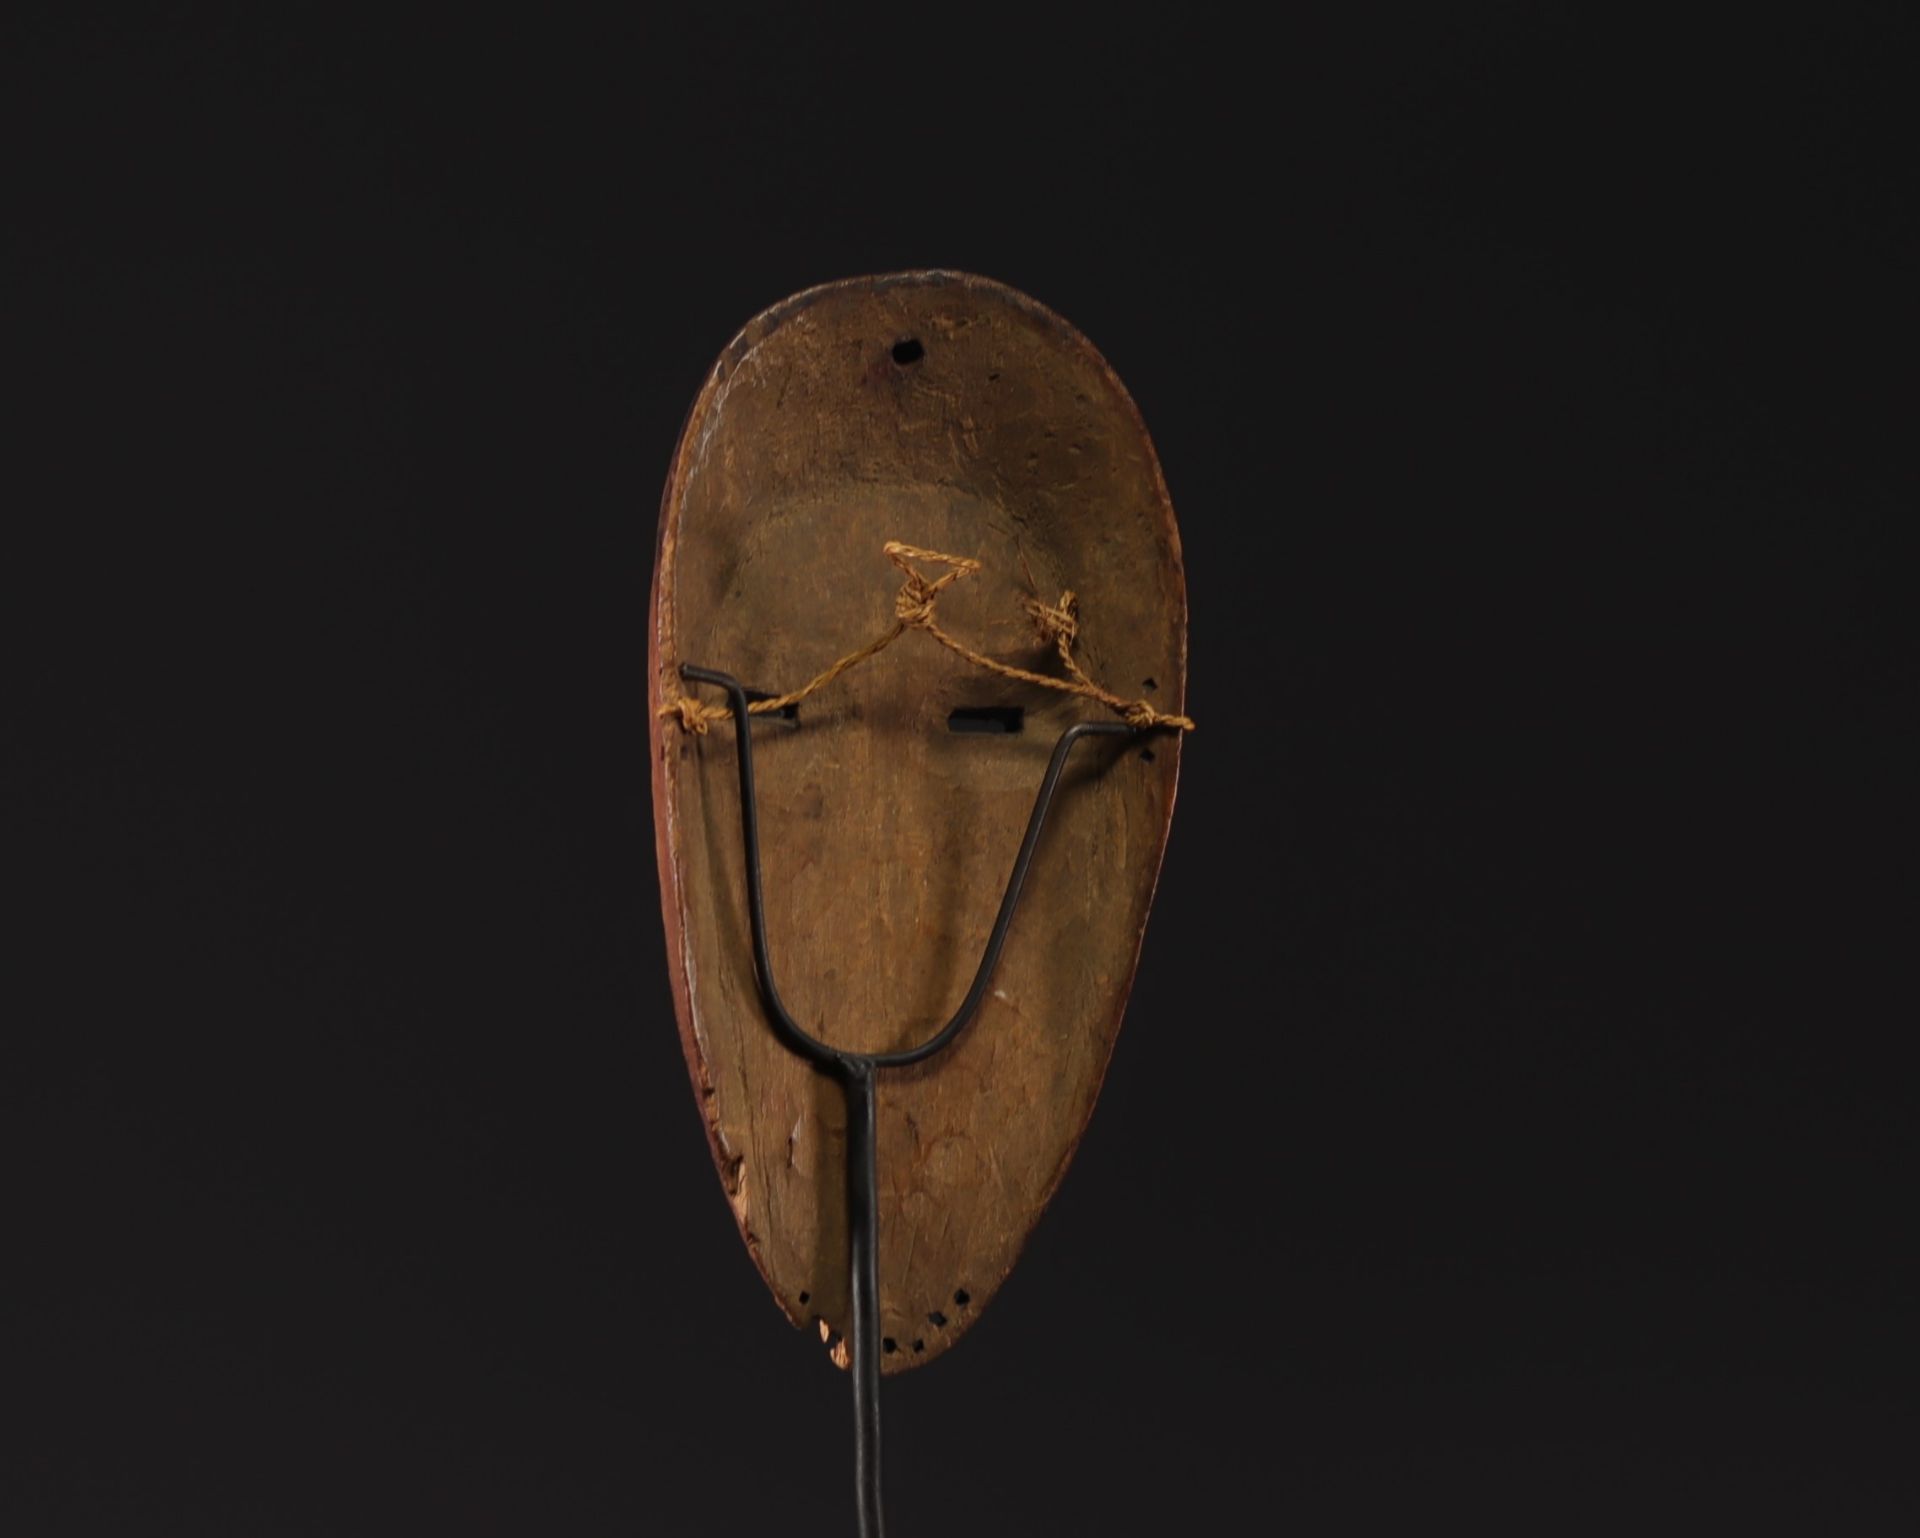 Lega Mask - Rep.Dem.Congo - Image 4 of 4